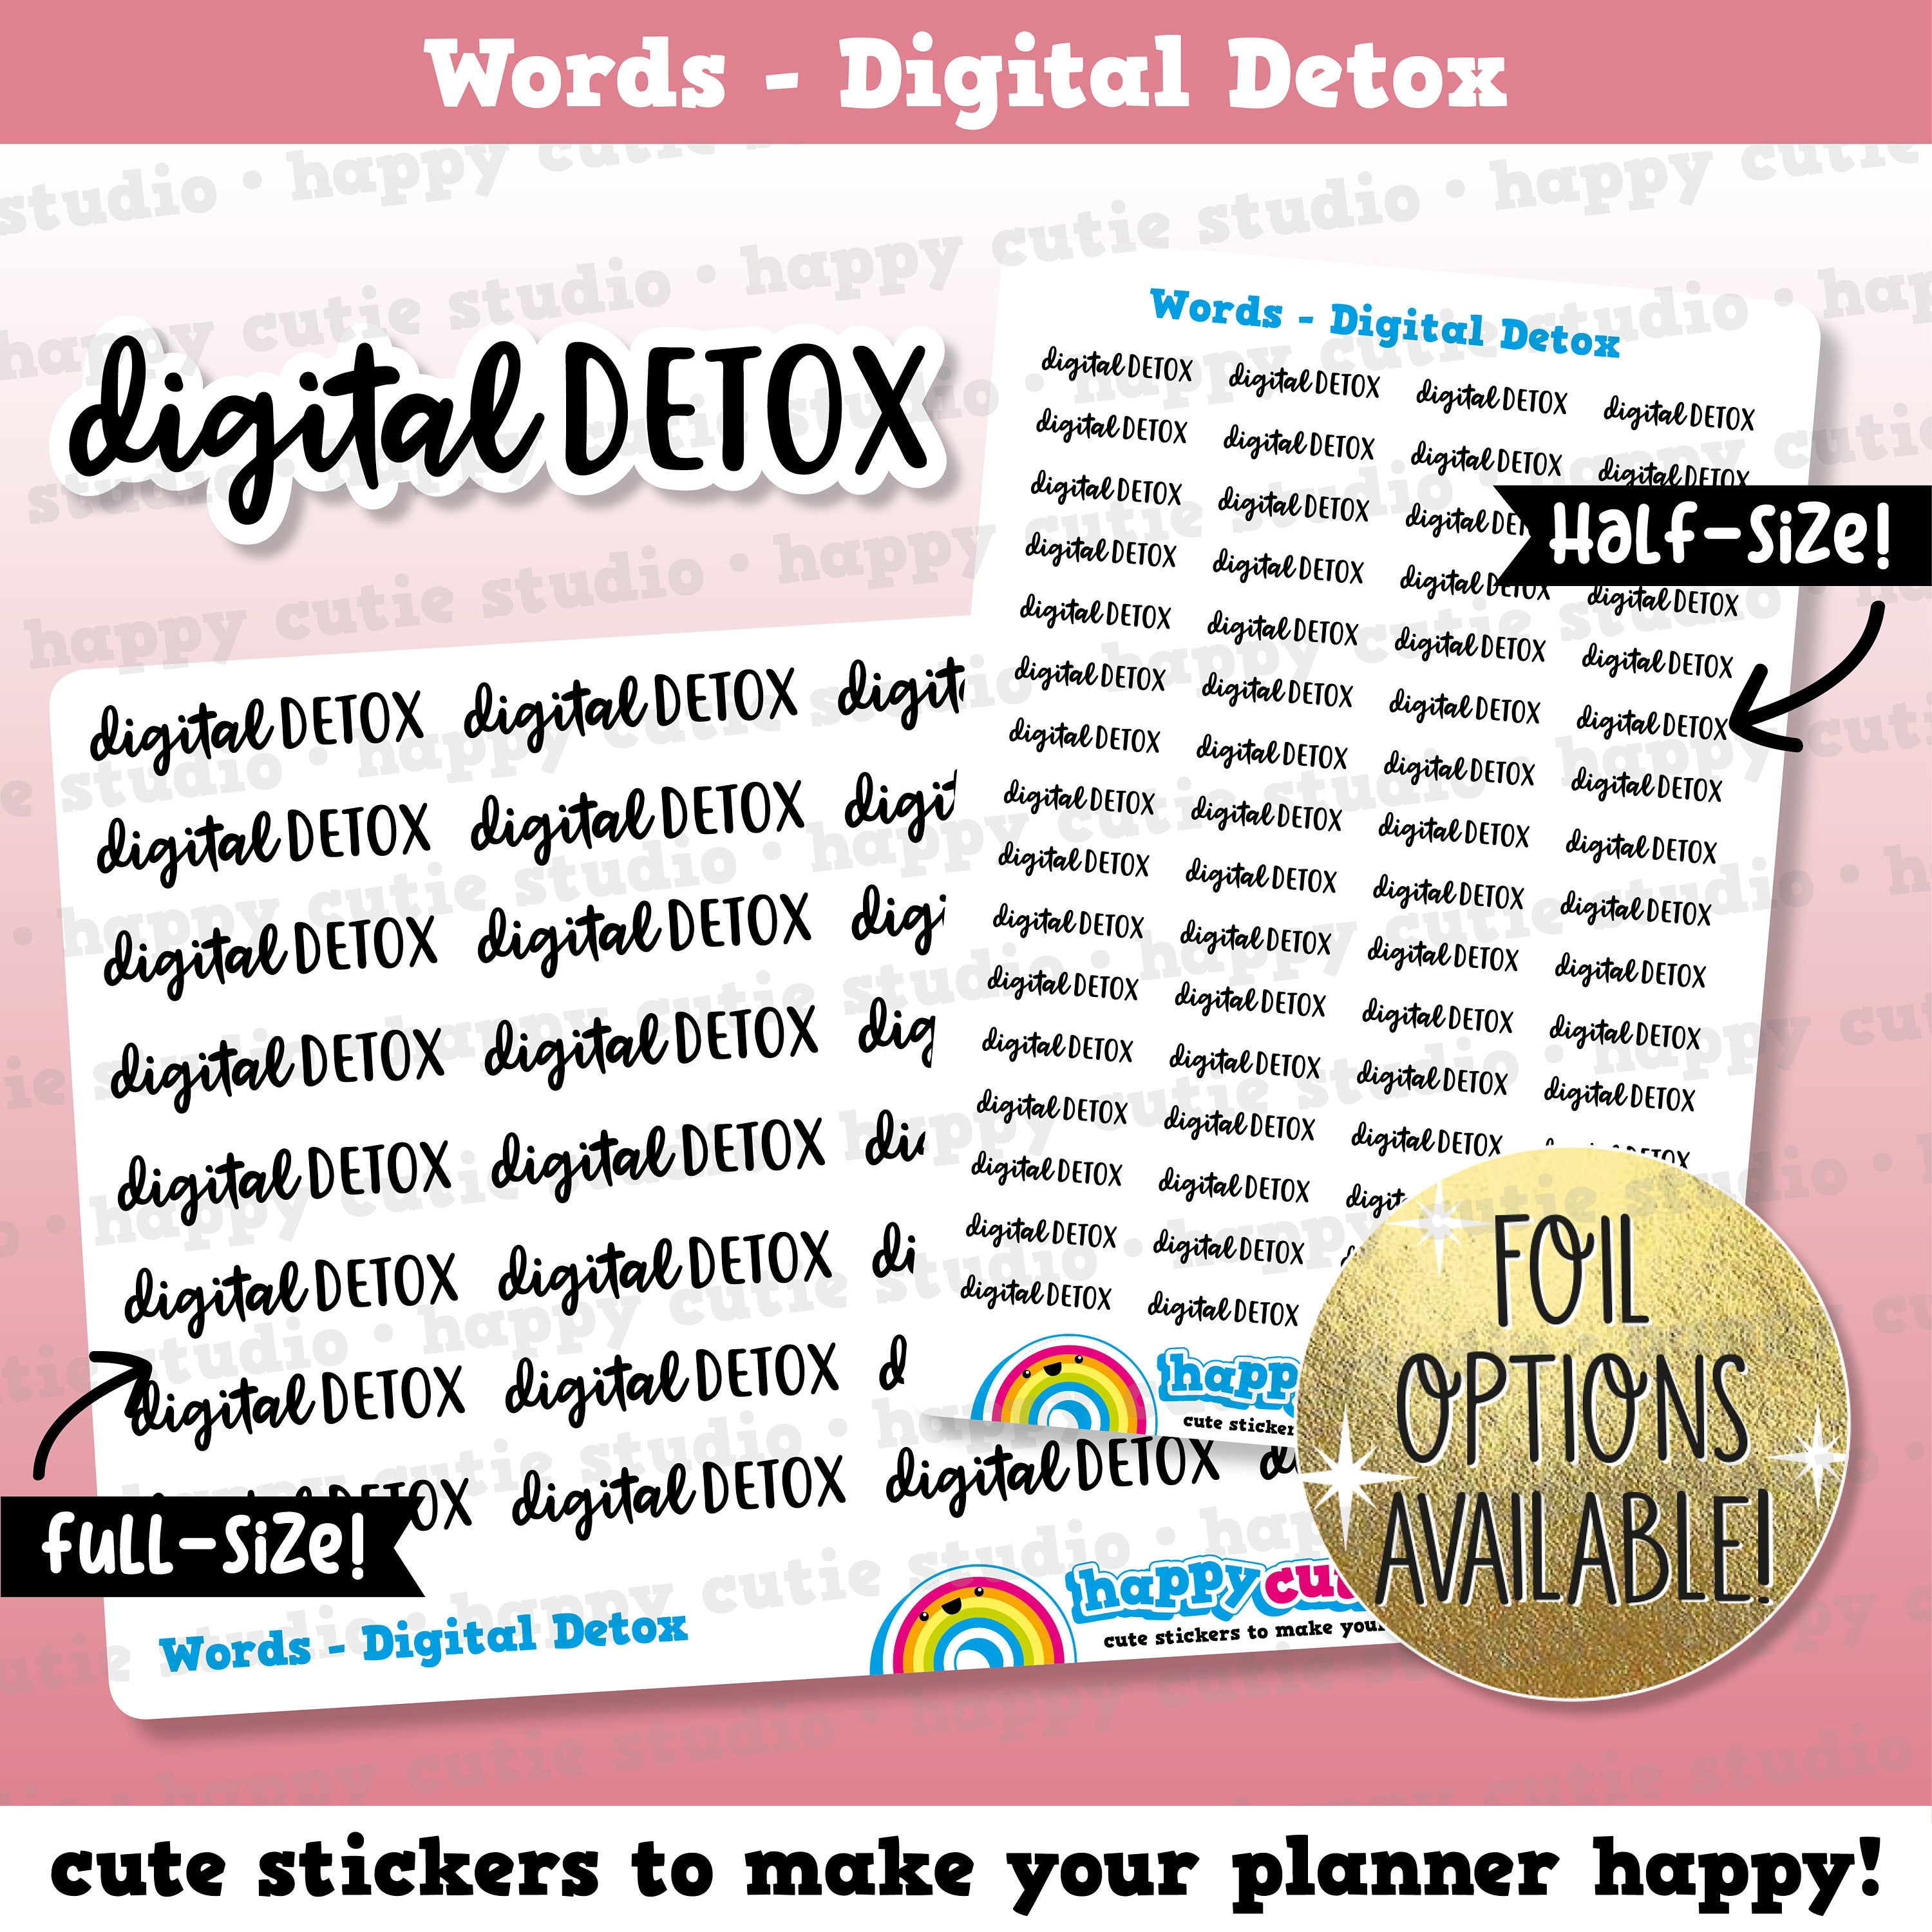 Digital Detox Words/Banners/Functional/Foil Planner Stickers